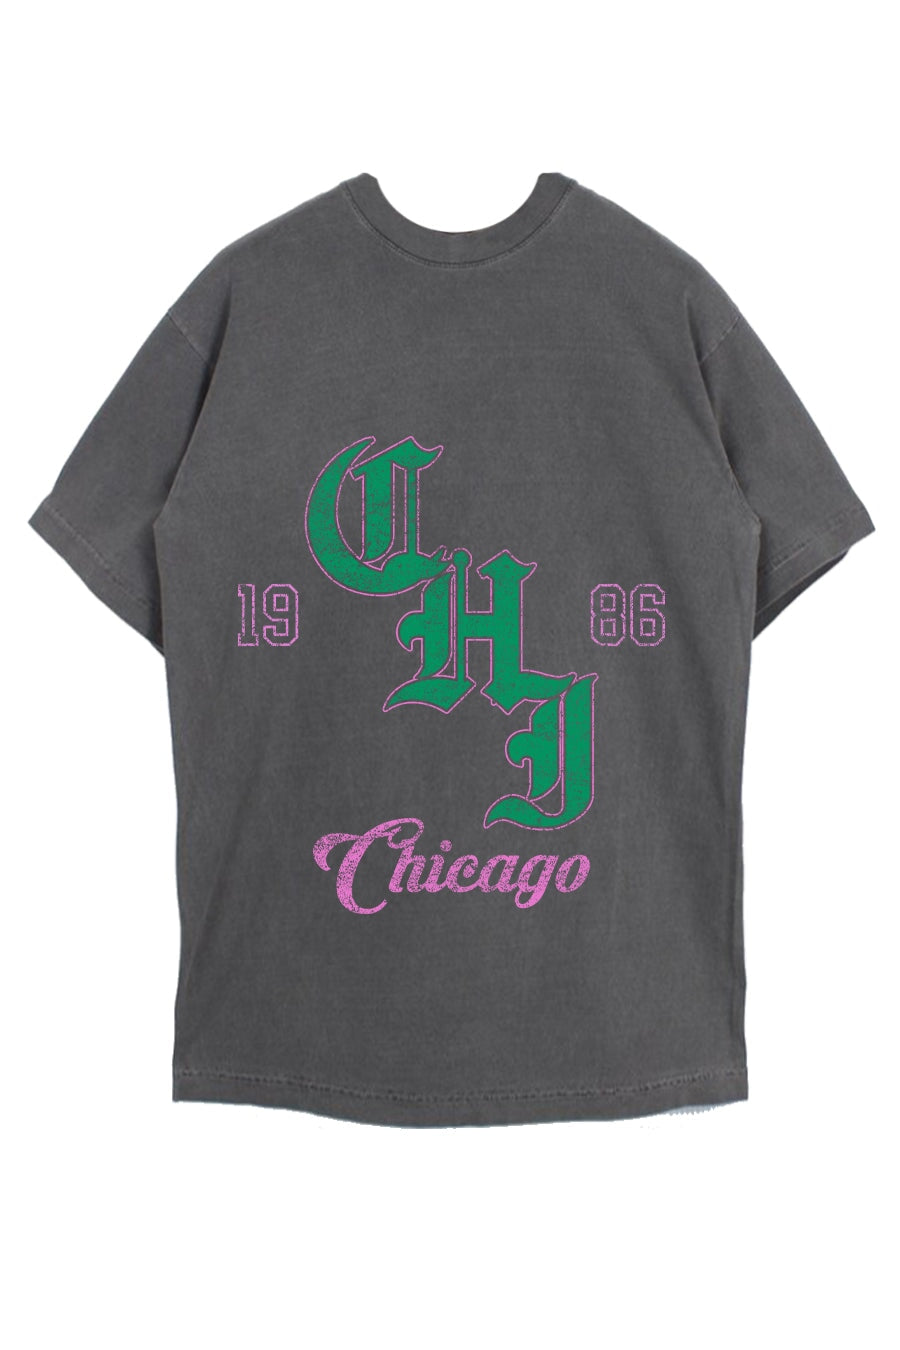 YAY SPORTS - Chicago Garment Dye Crew Neck Tee